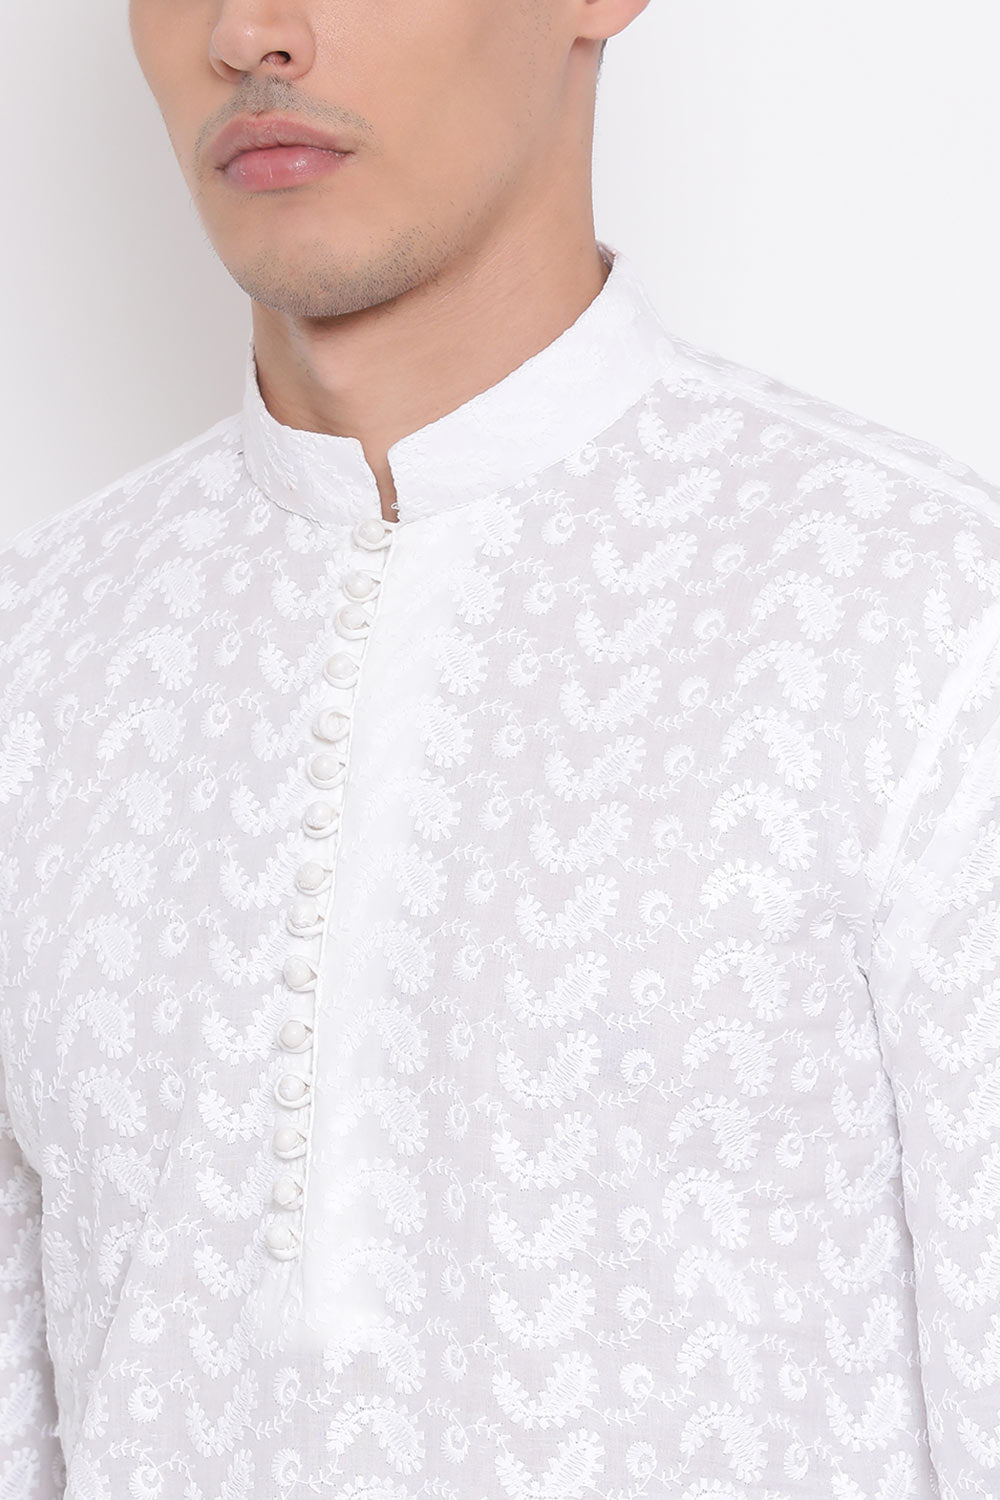 Embroidered White Kurta Pyjama Set for Casual Wear